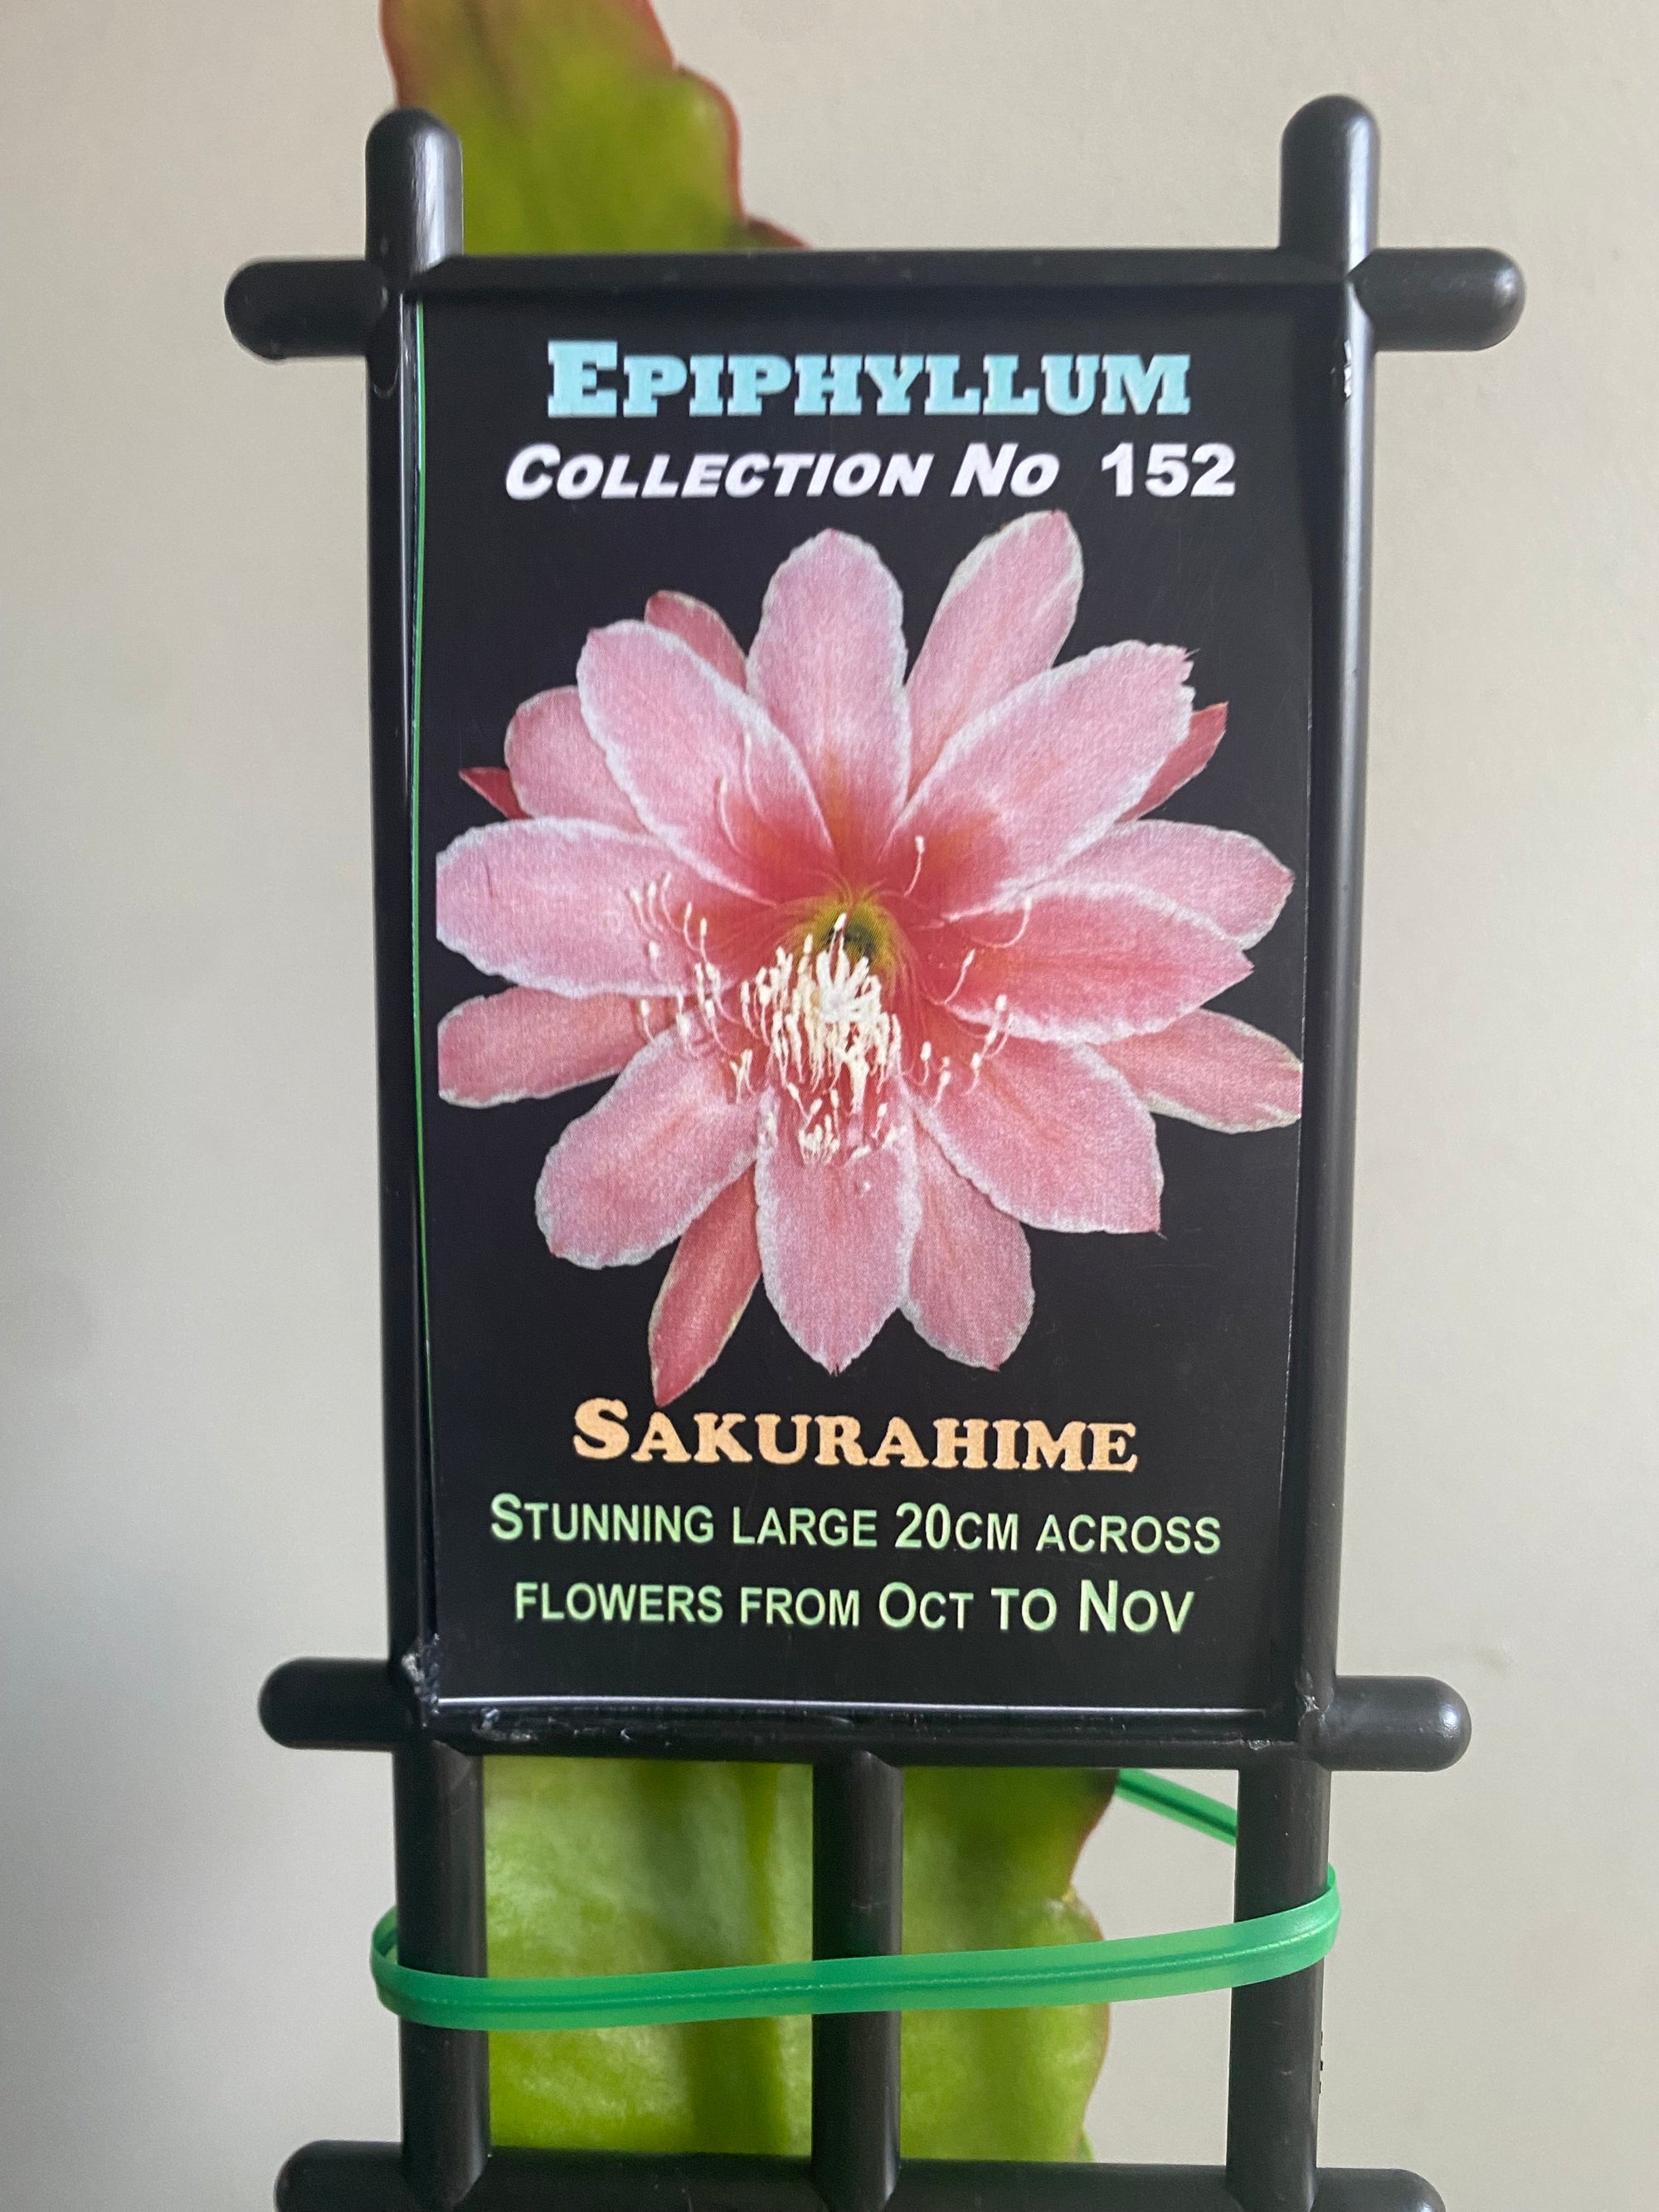 Epiphyllum 'Sakurahime' - Collection No. 152